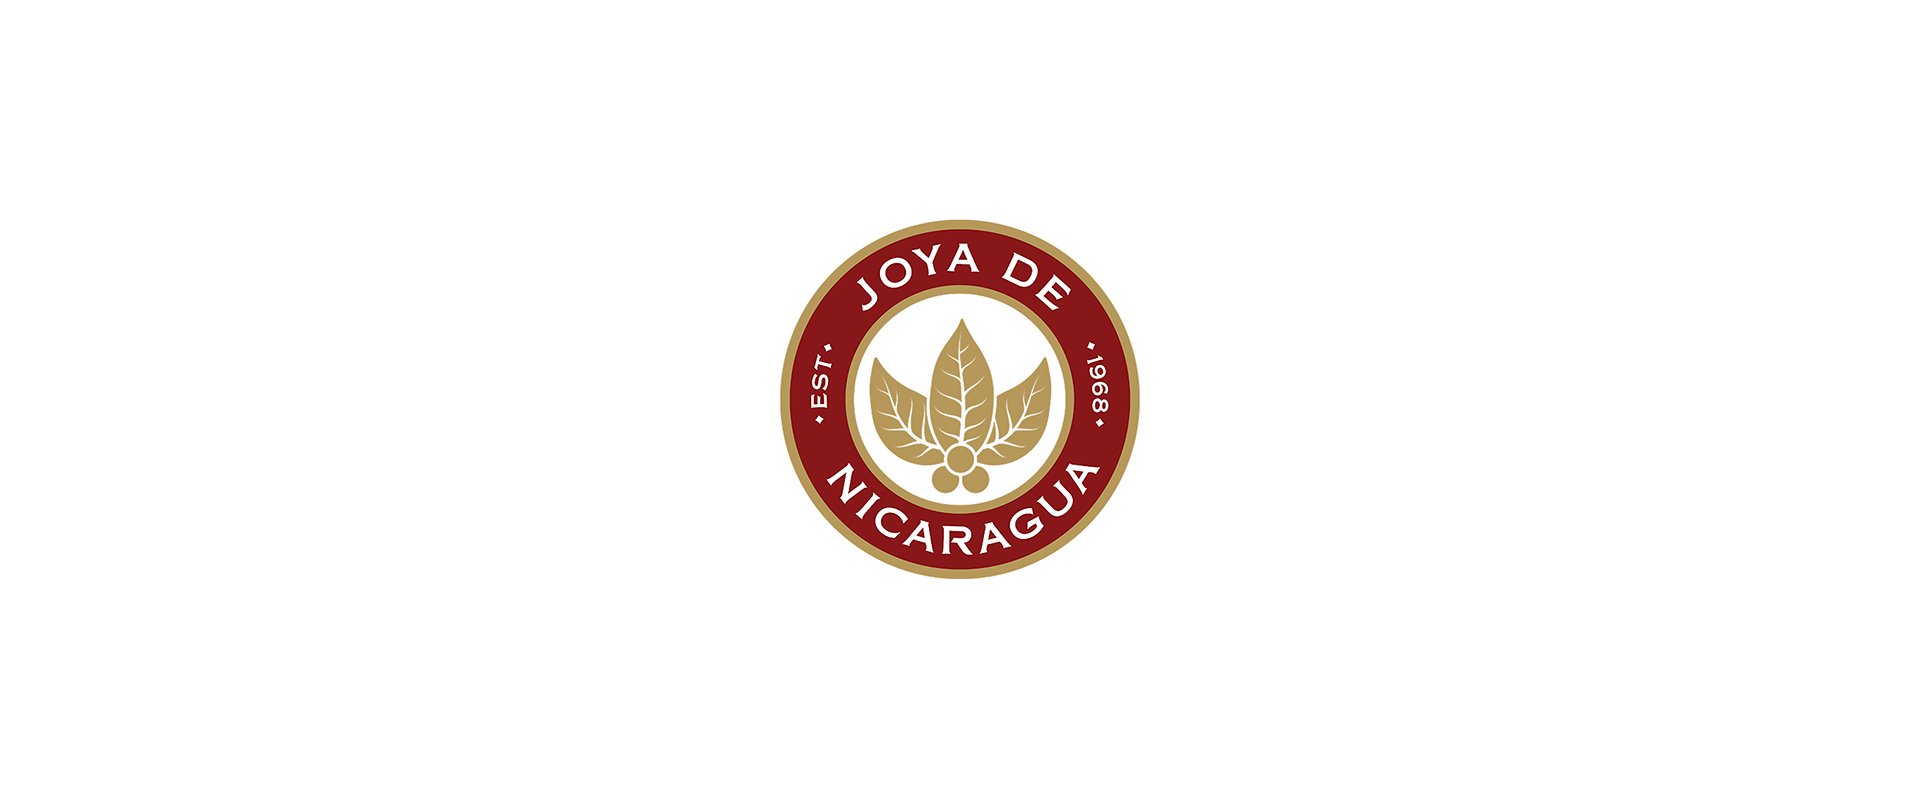 New World Cigars > Joya de Nicaragua